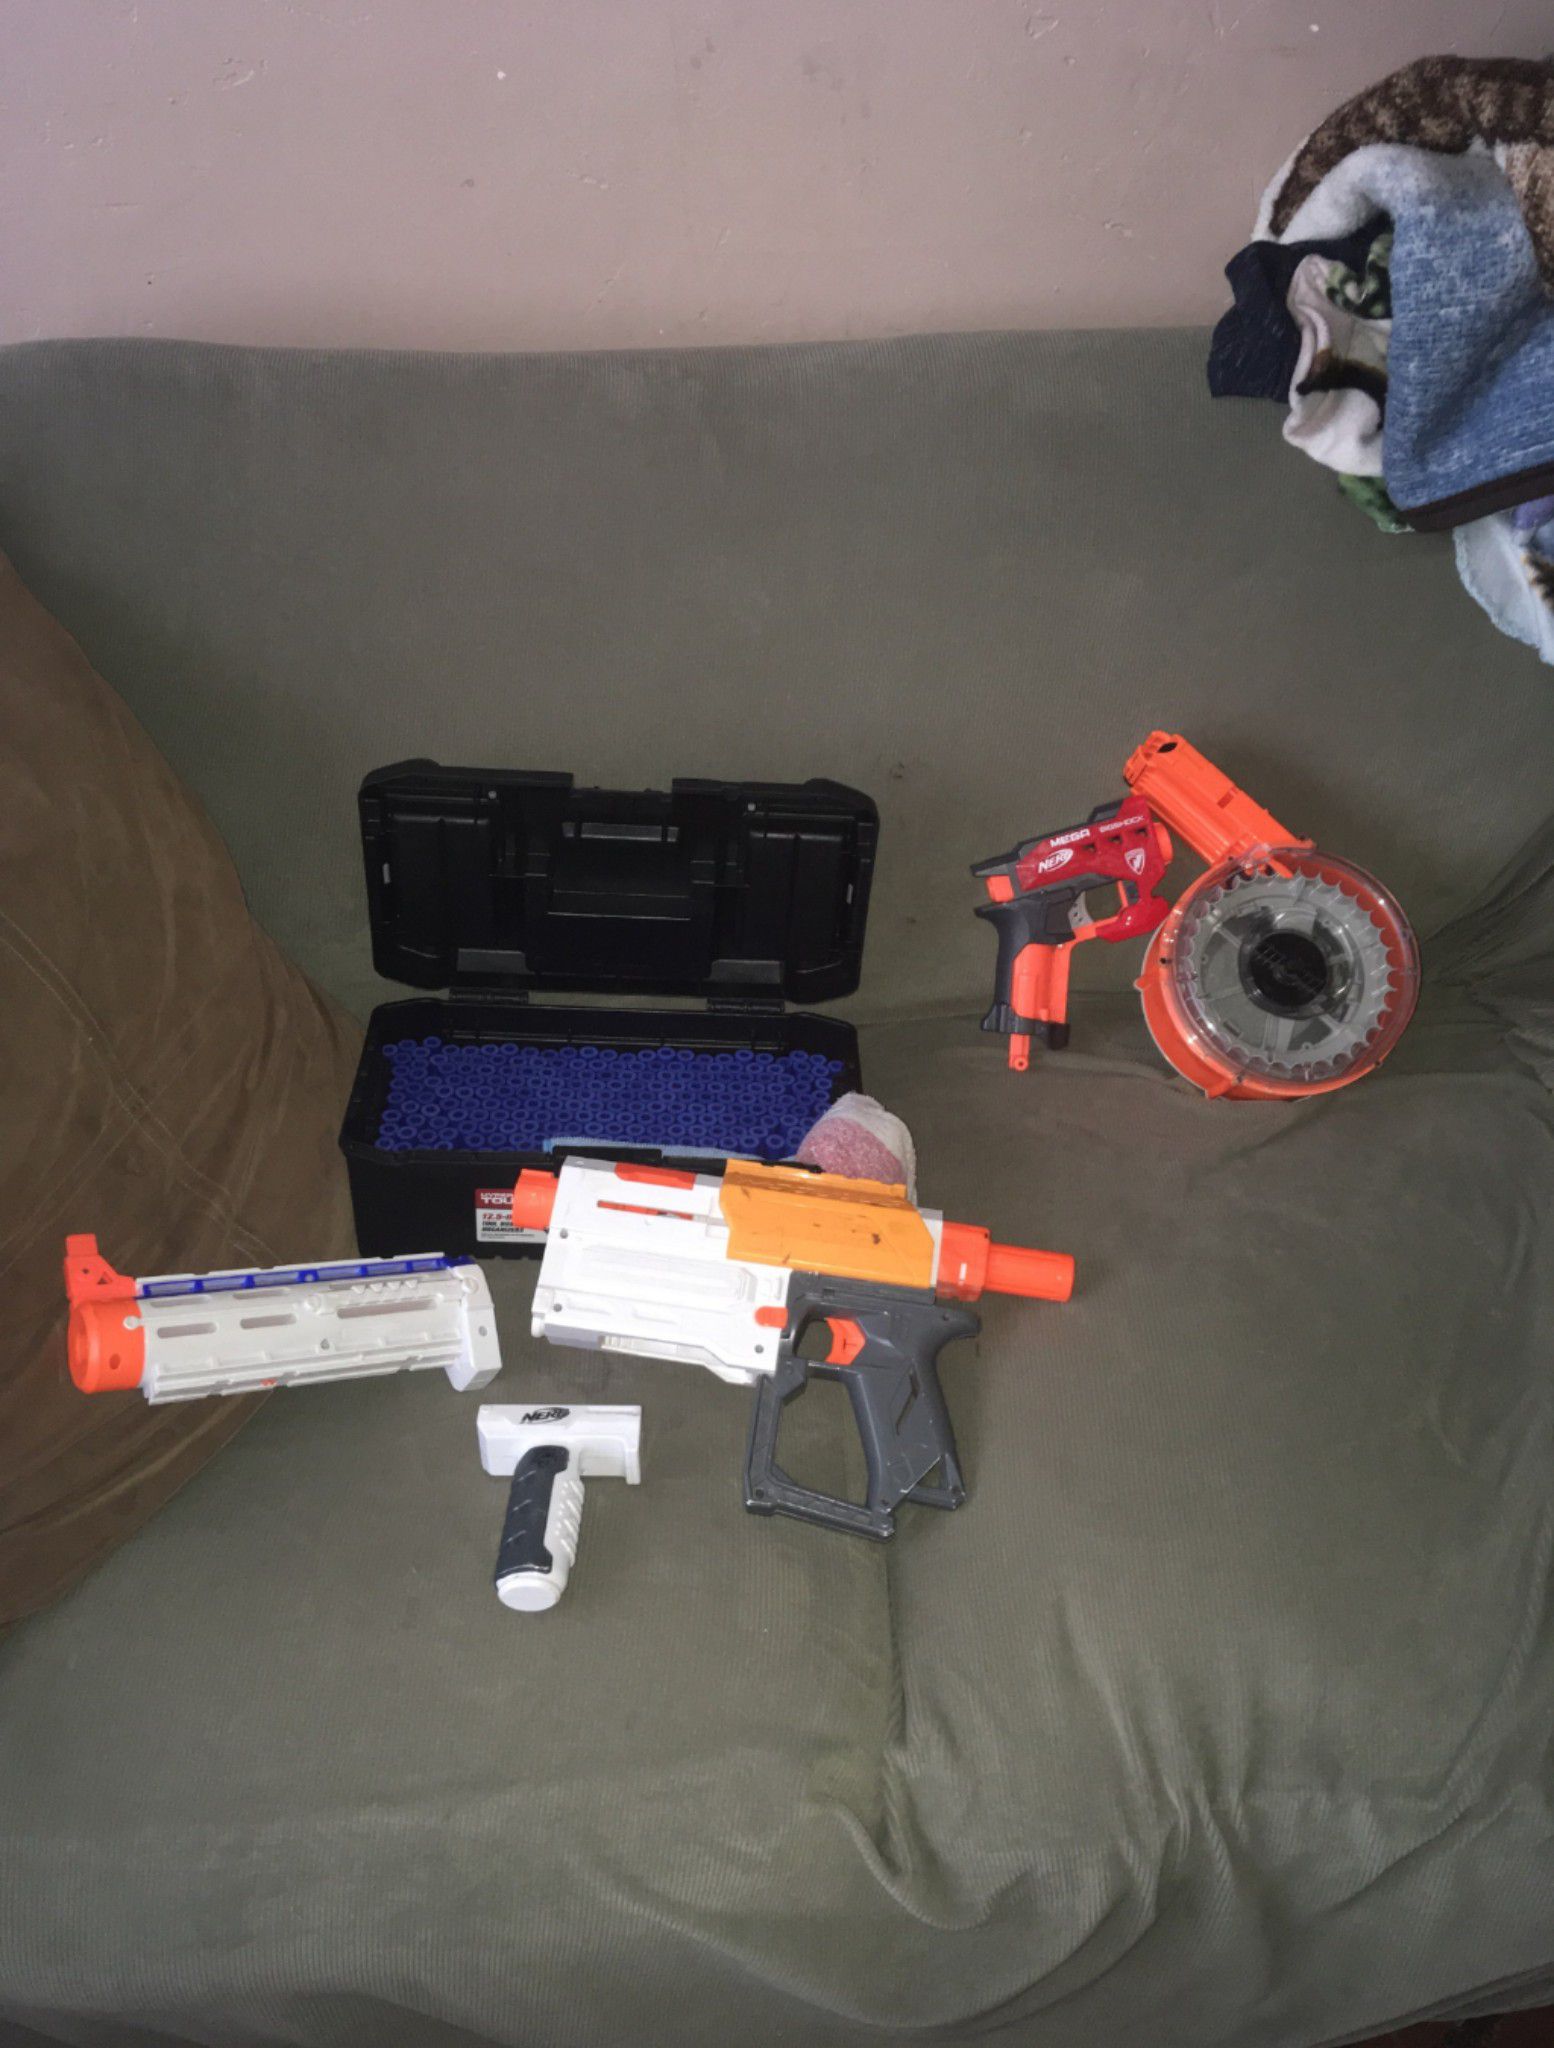 Nerf guns and ammo